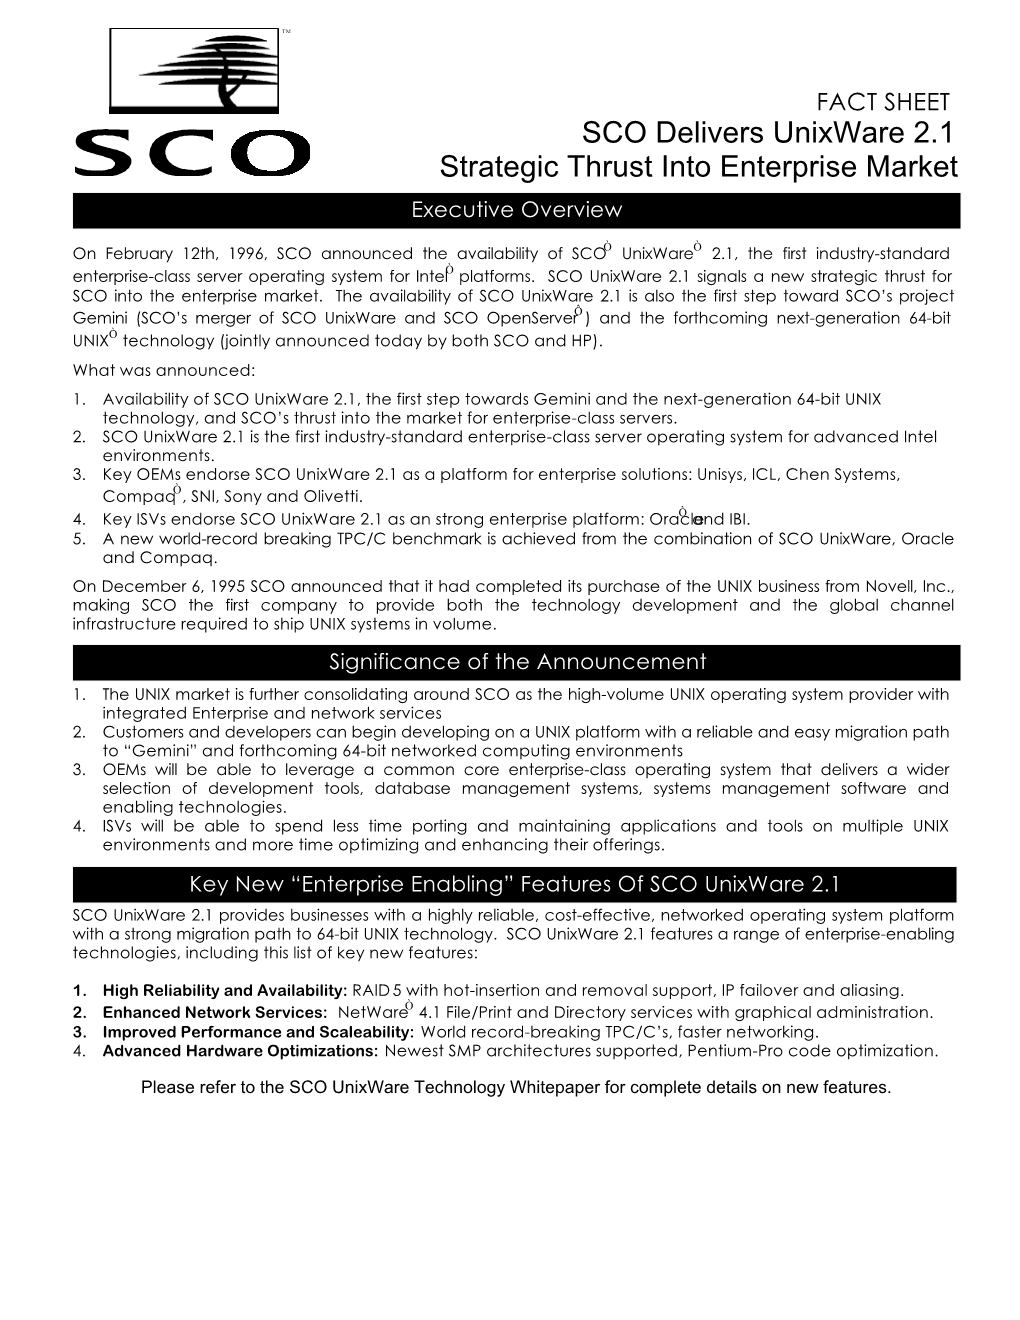 SCO Delivers Unixware 2.1 Strategic Thrust Into Enterprise Market Executive Overview